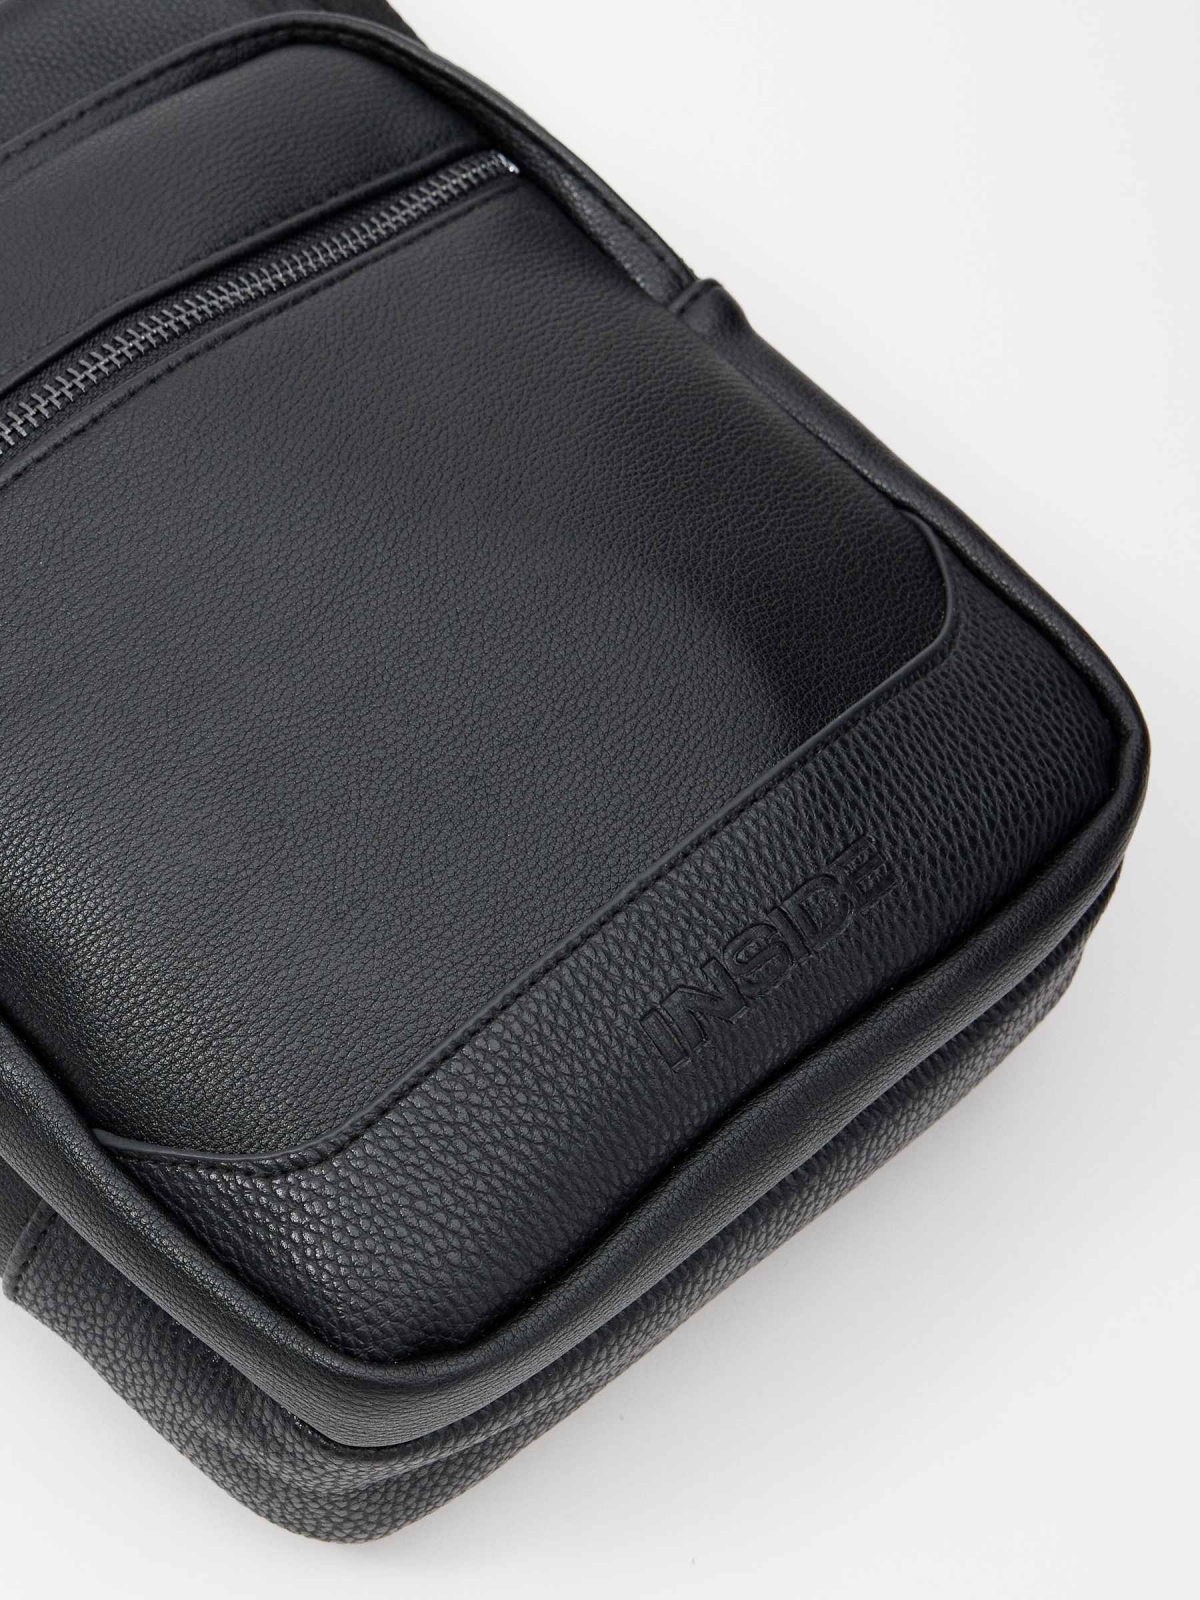 Men's black patent leather crossbody | Men's Bags | INSIDE